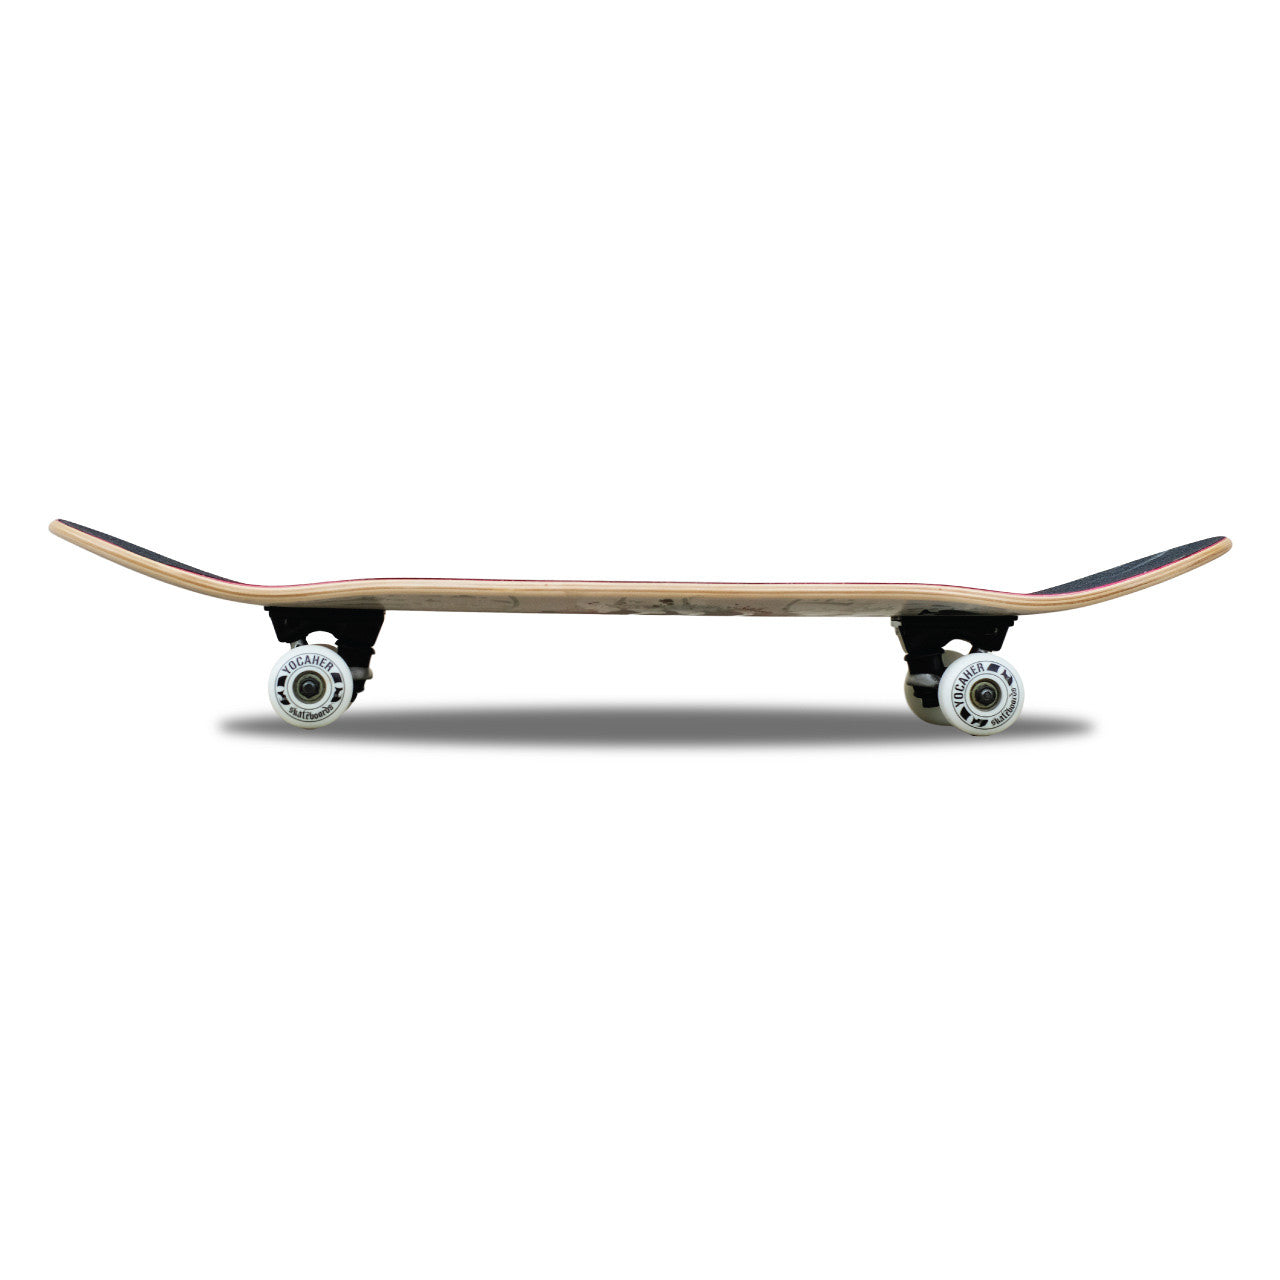 Yocaher Complete Skateboard 7.75" - Checker Silver